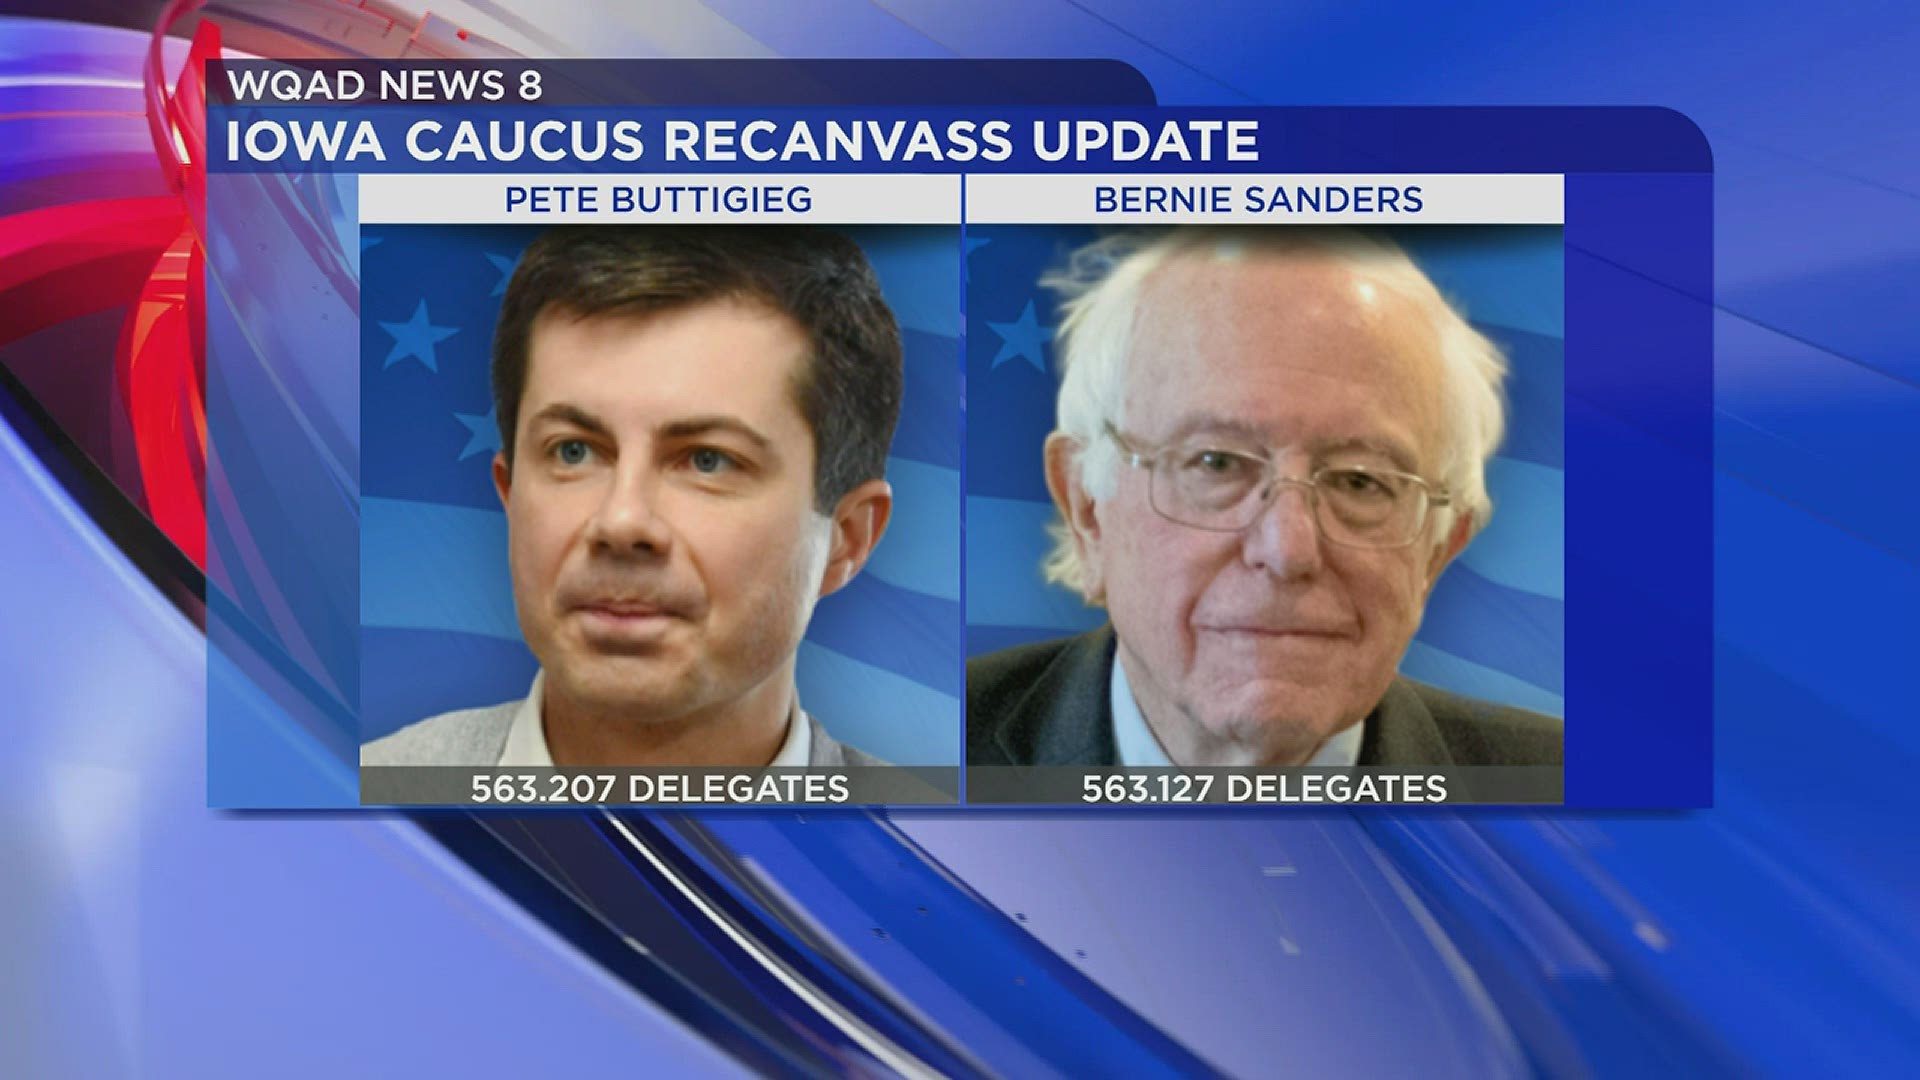 Results show an effective tie between Sanders and Buttigieg.